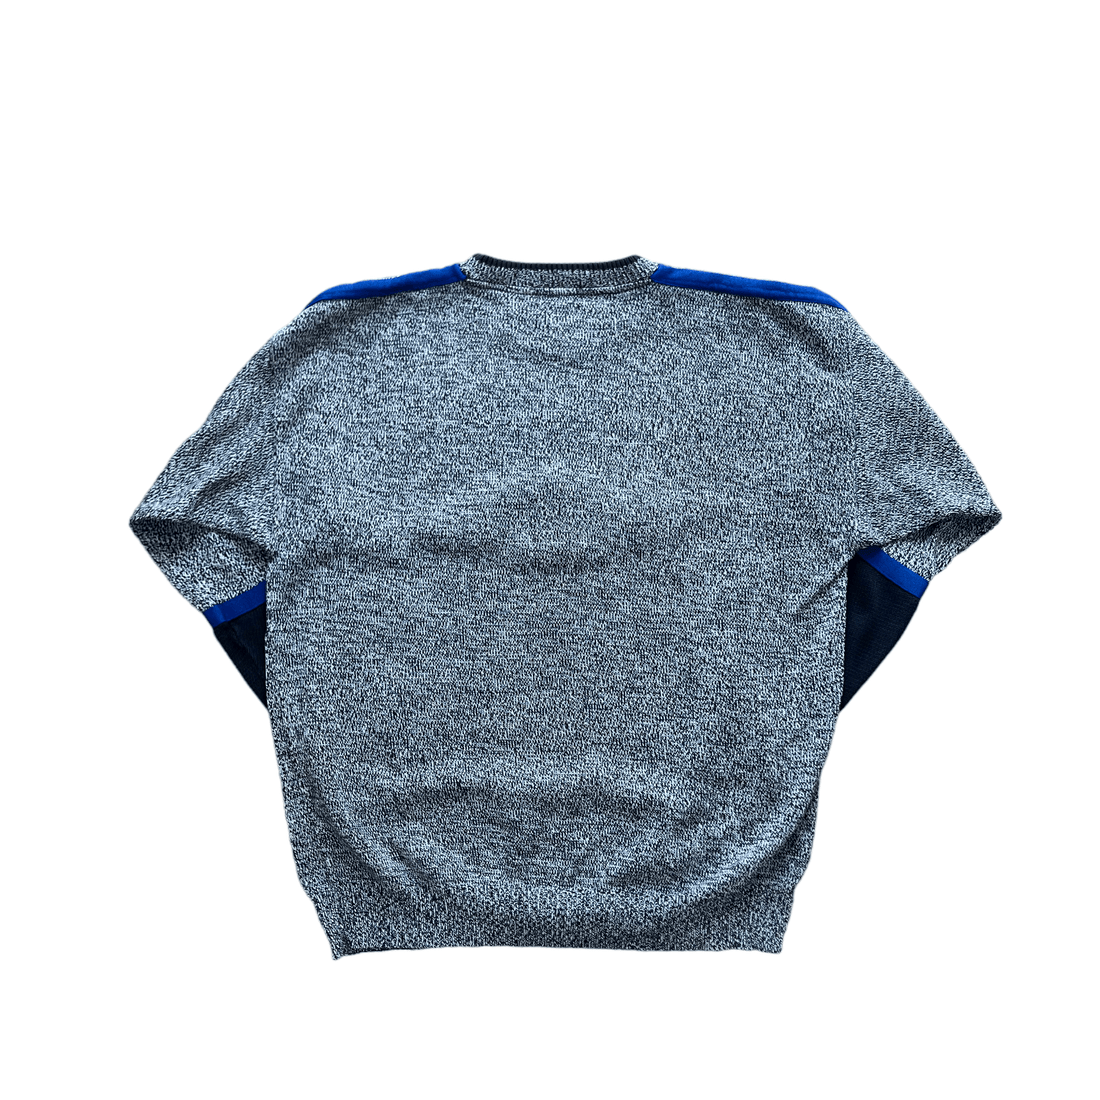 Vintage 90s Grey Fila Sweatshirt - XXL (Recommended Size - Extra Large) - The Streetwear Studio